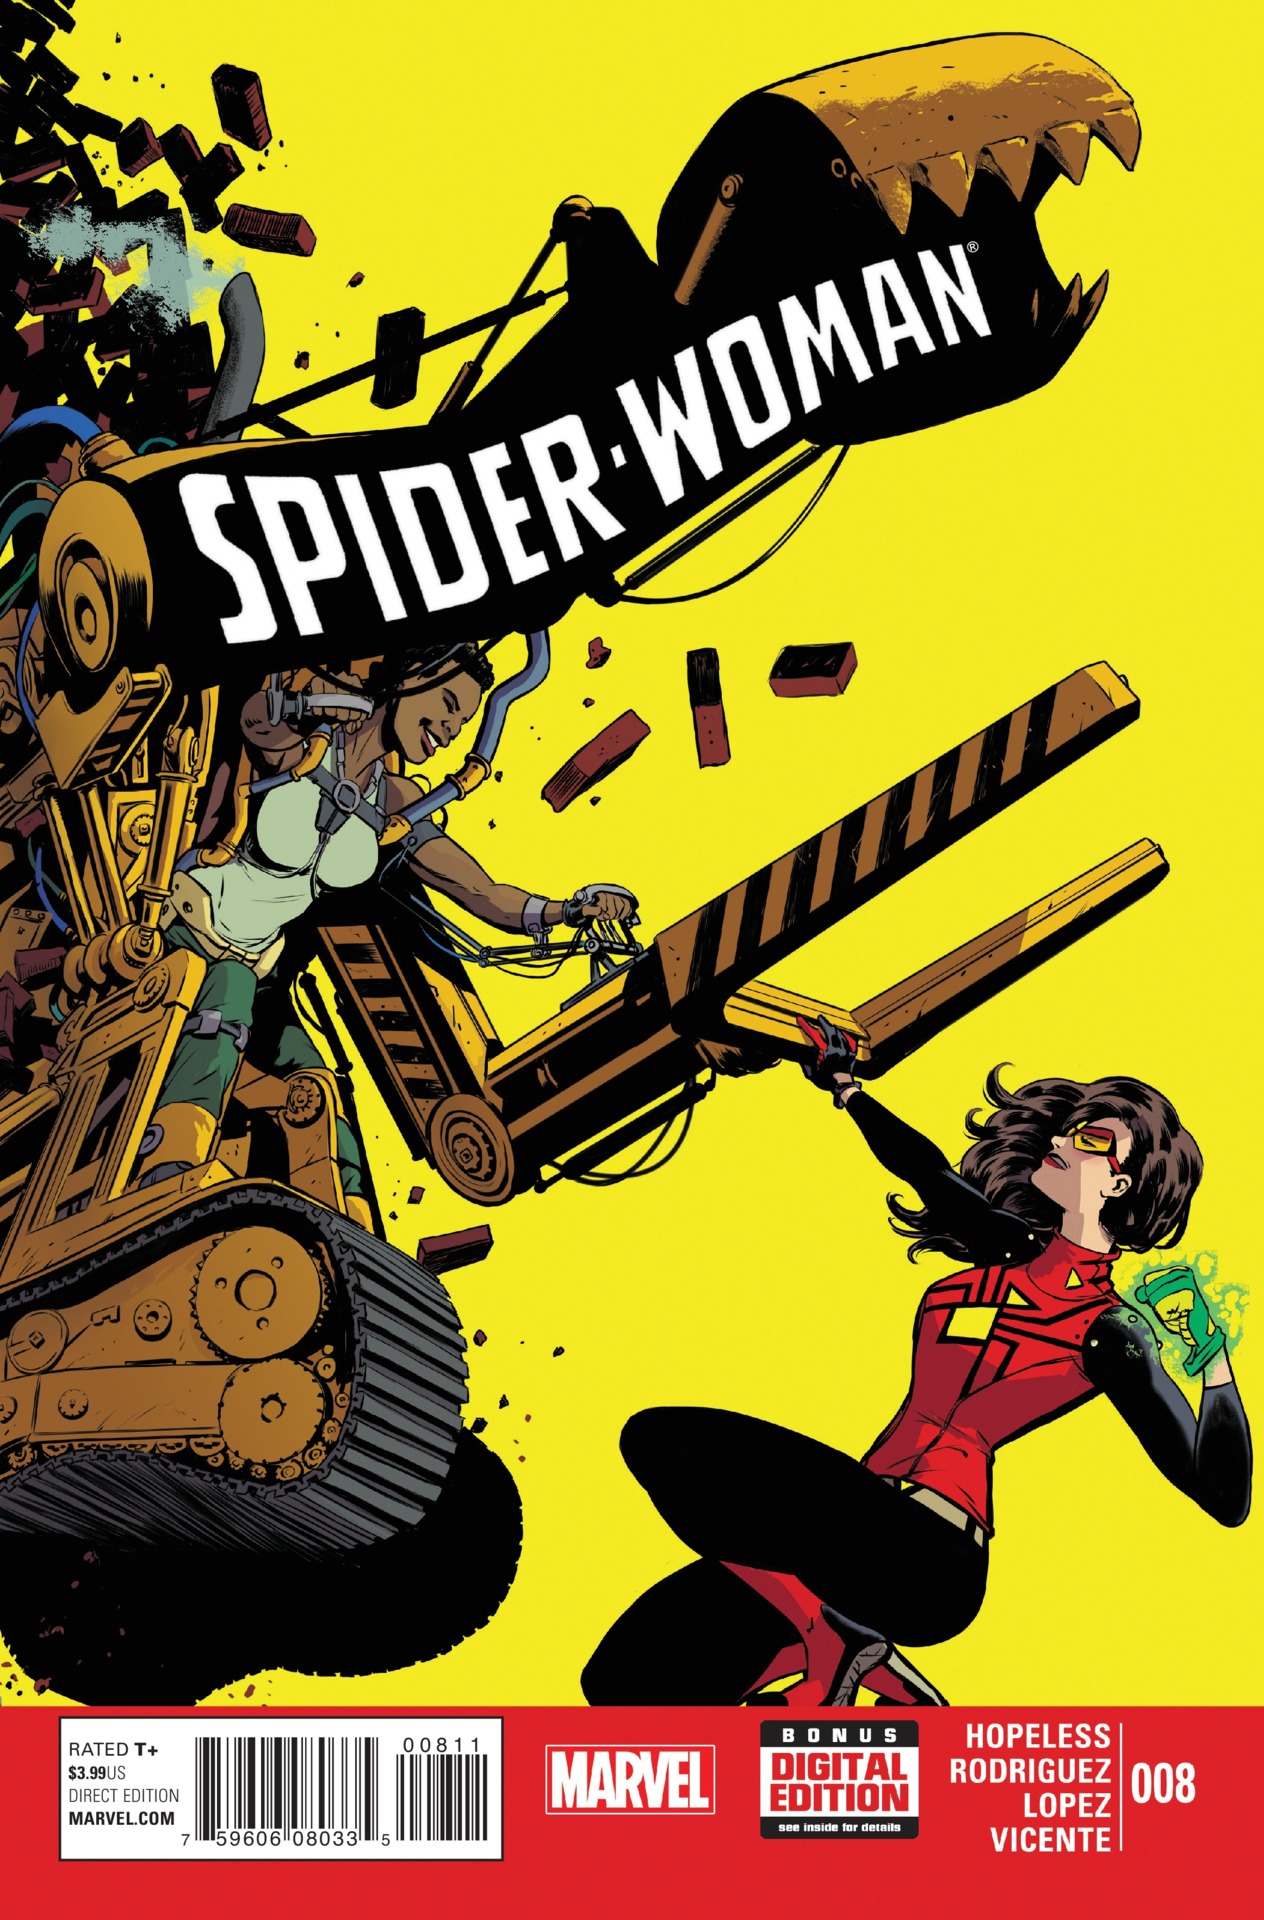 Hopeless' Spider-Woman